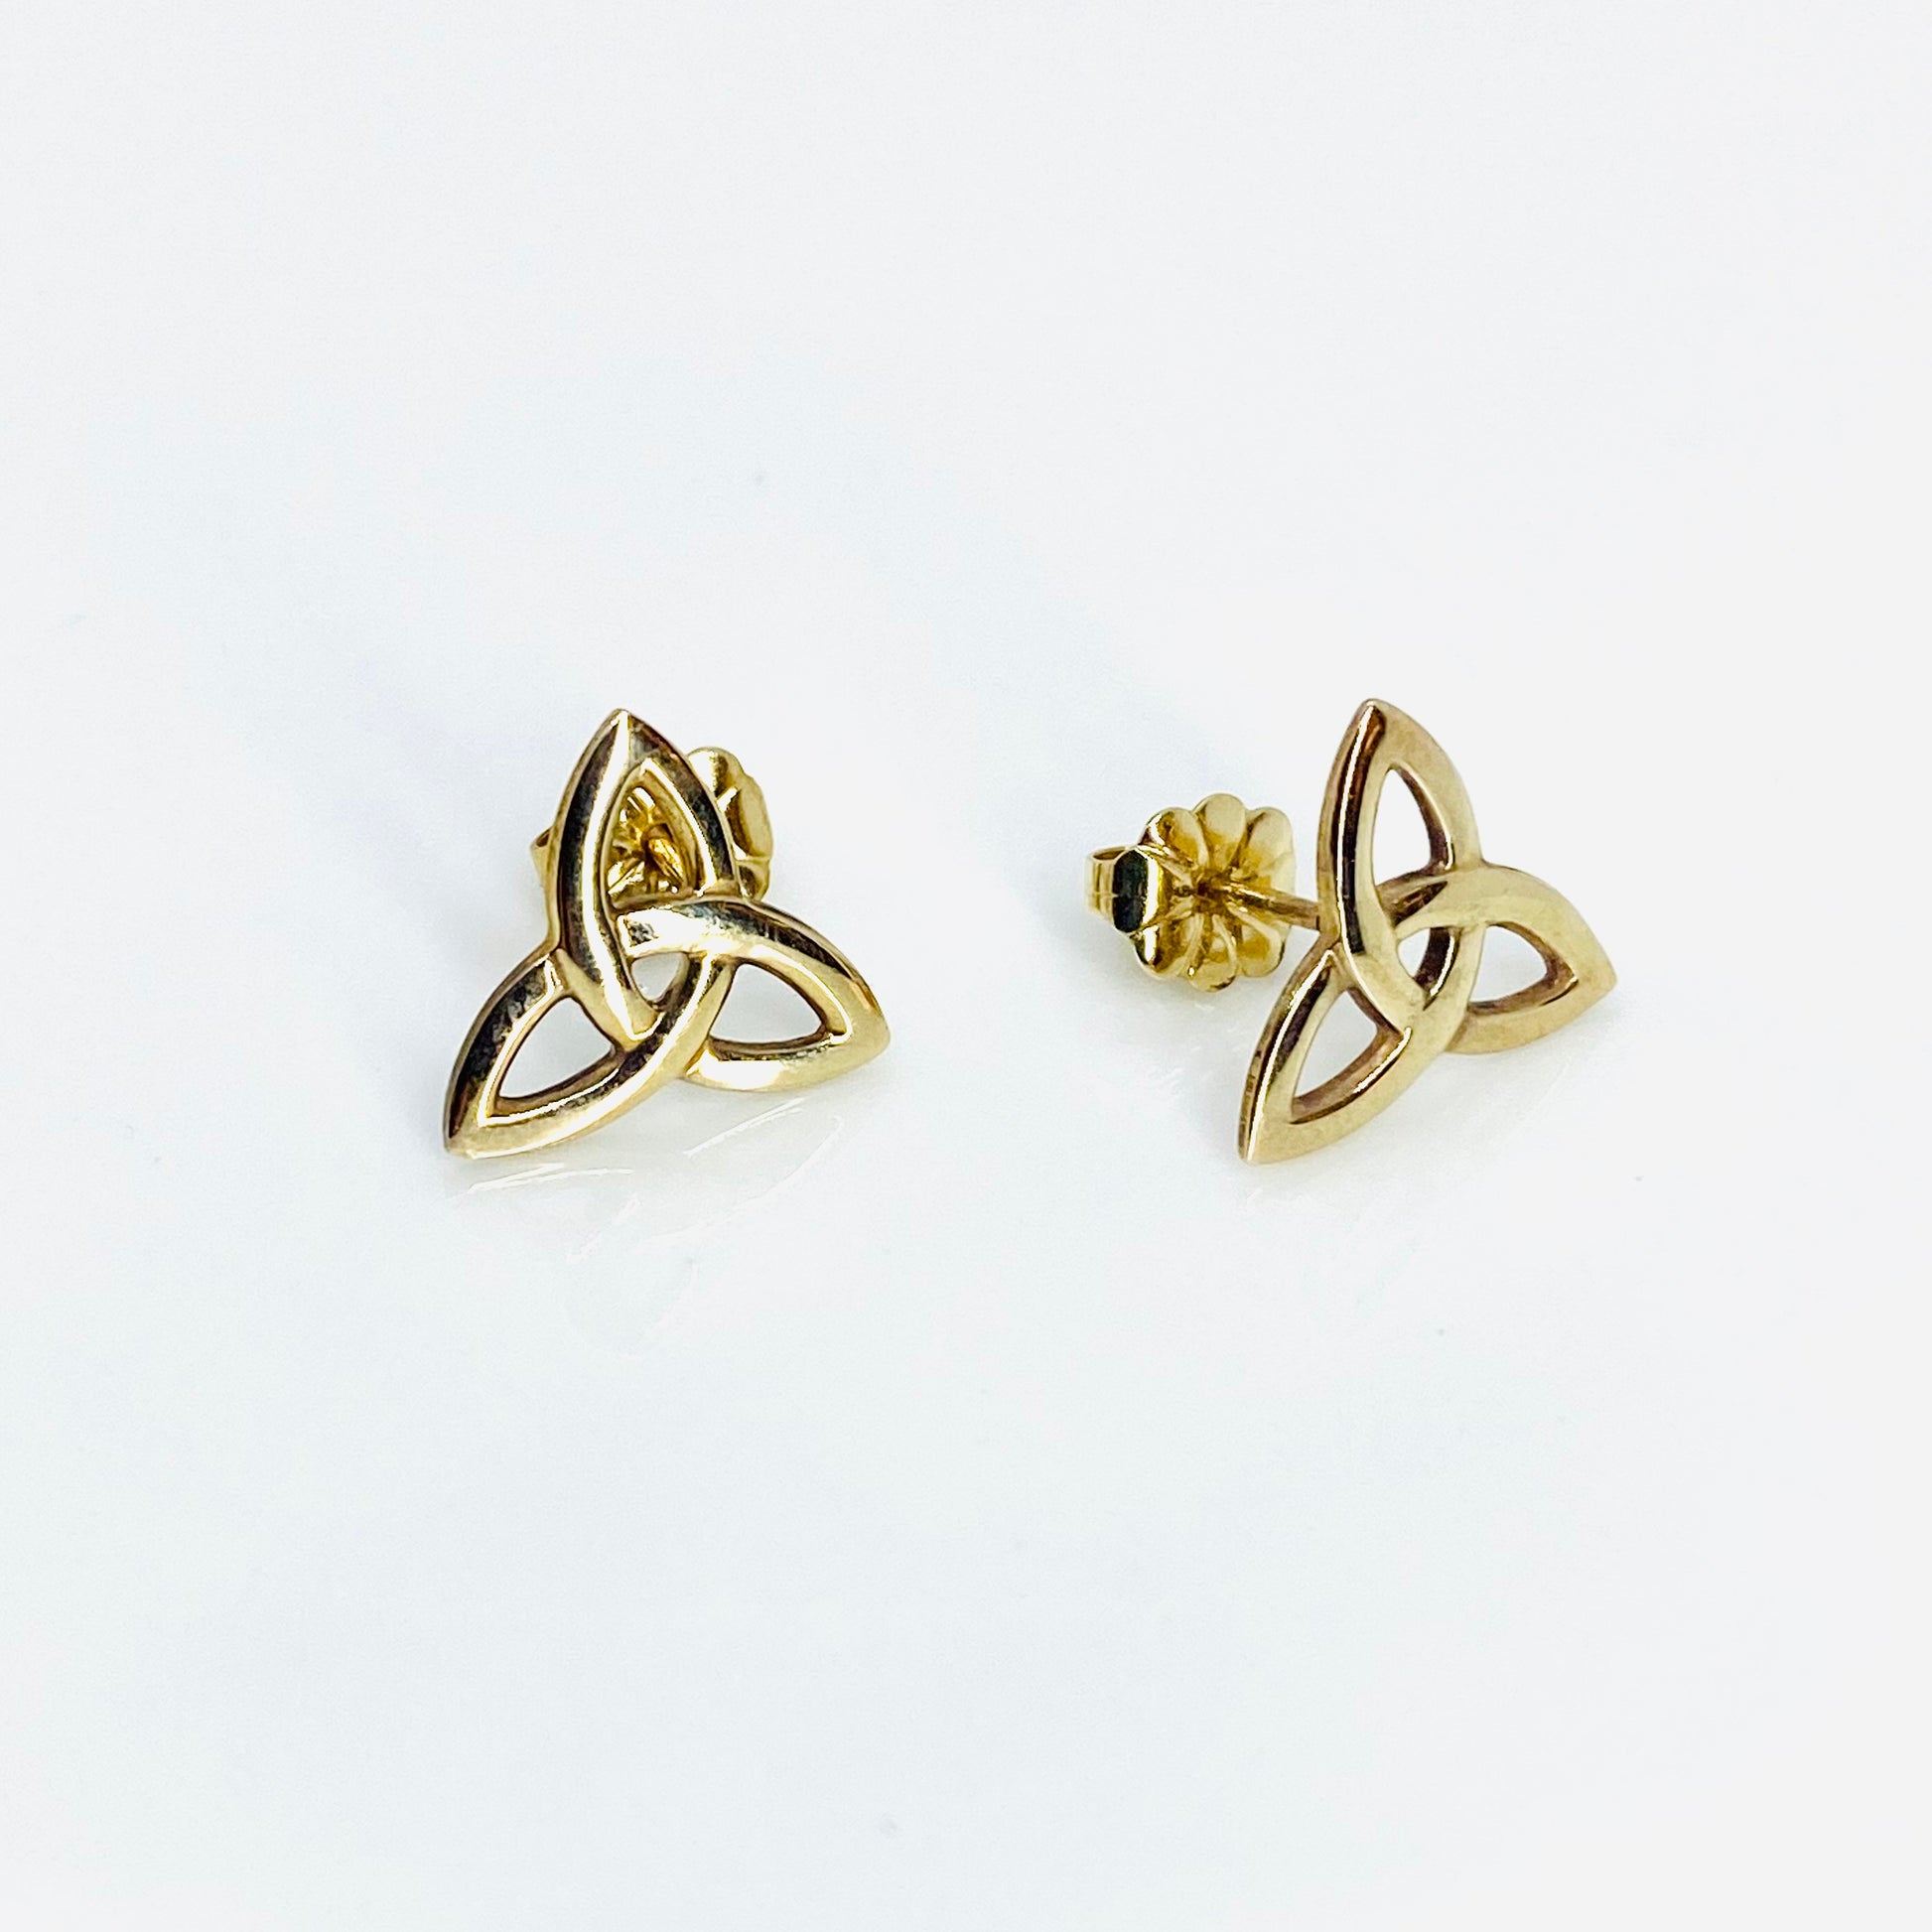 9ct Gold Trinity Knot Stud Earrings - John Ross Jewellers